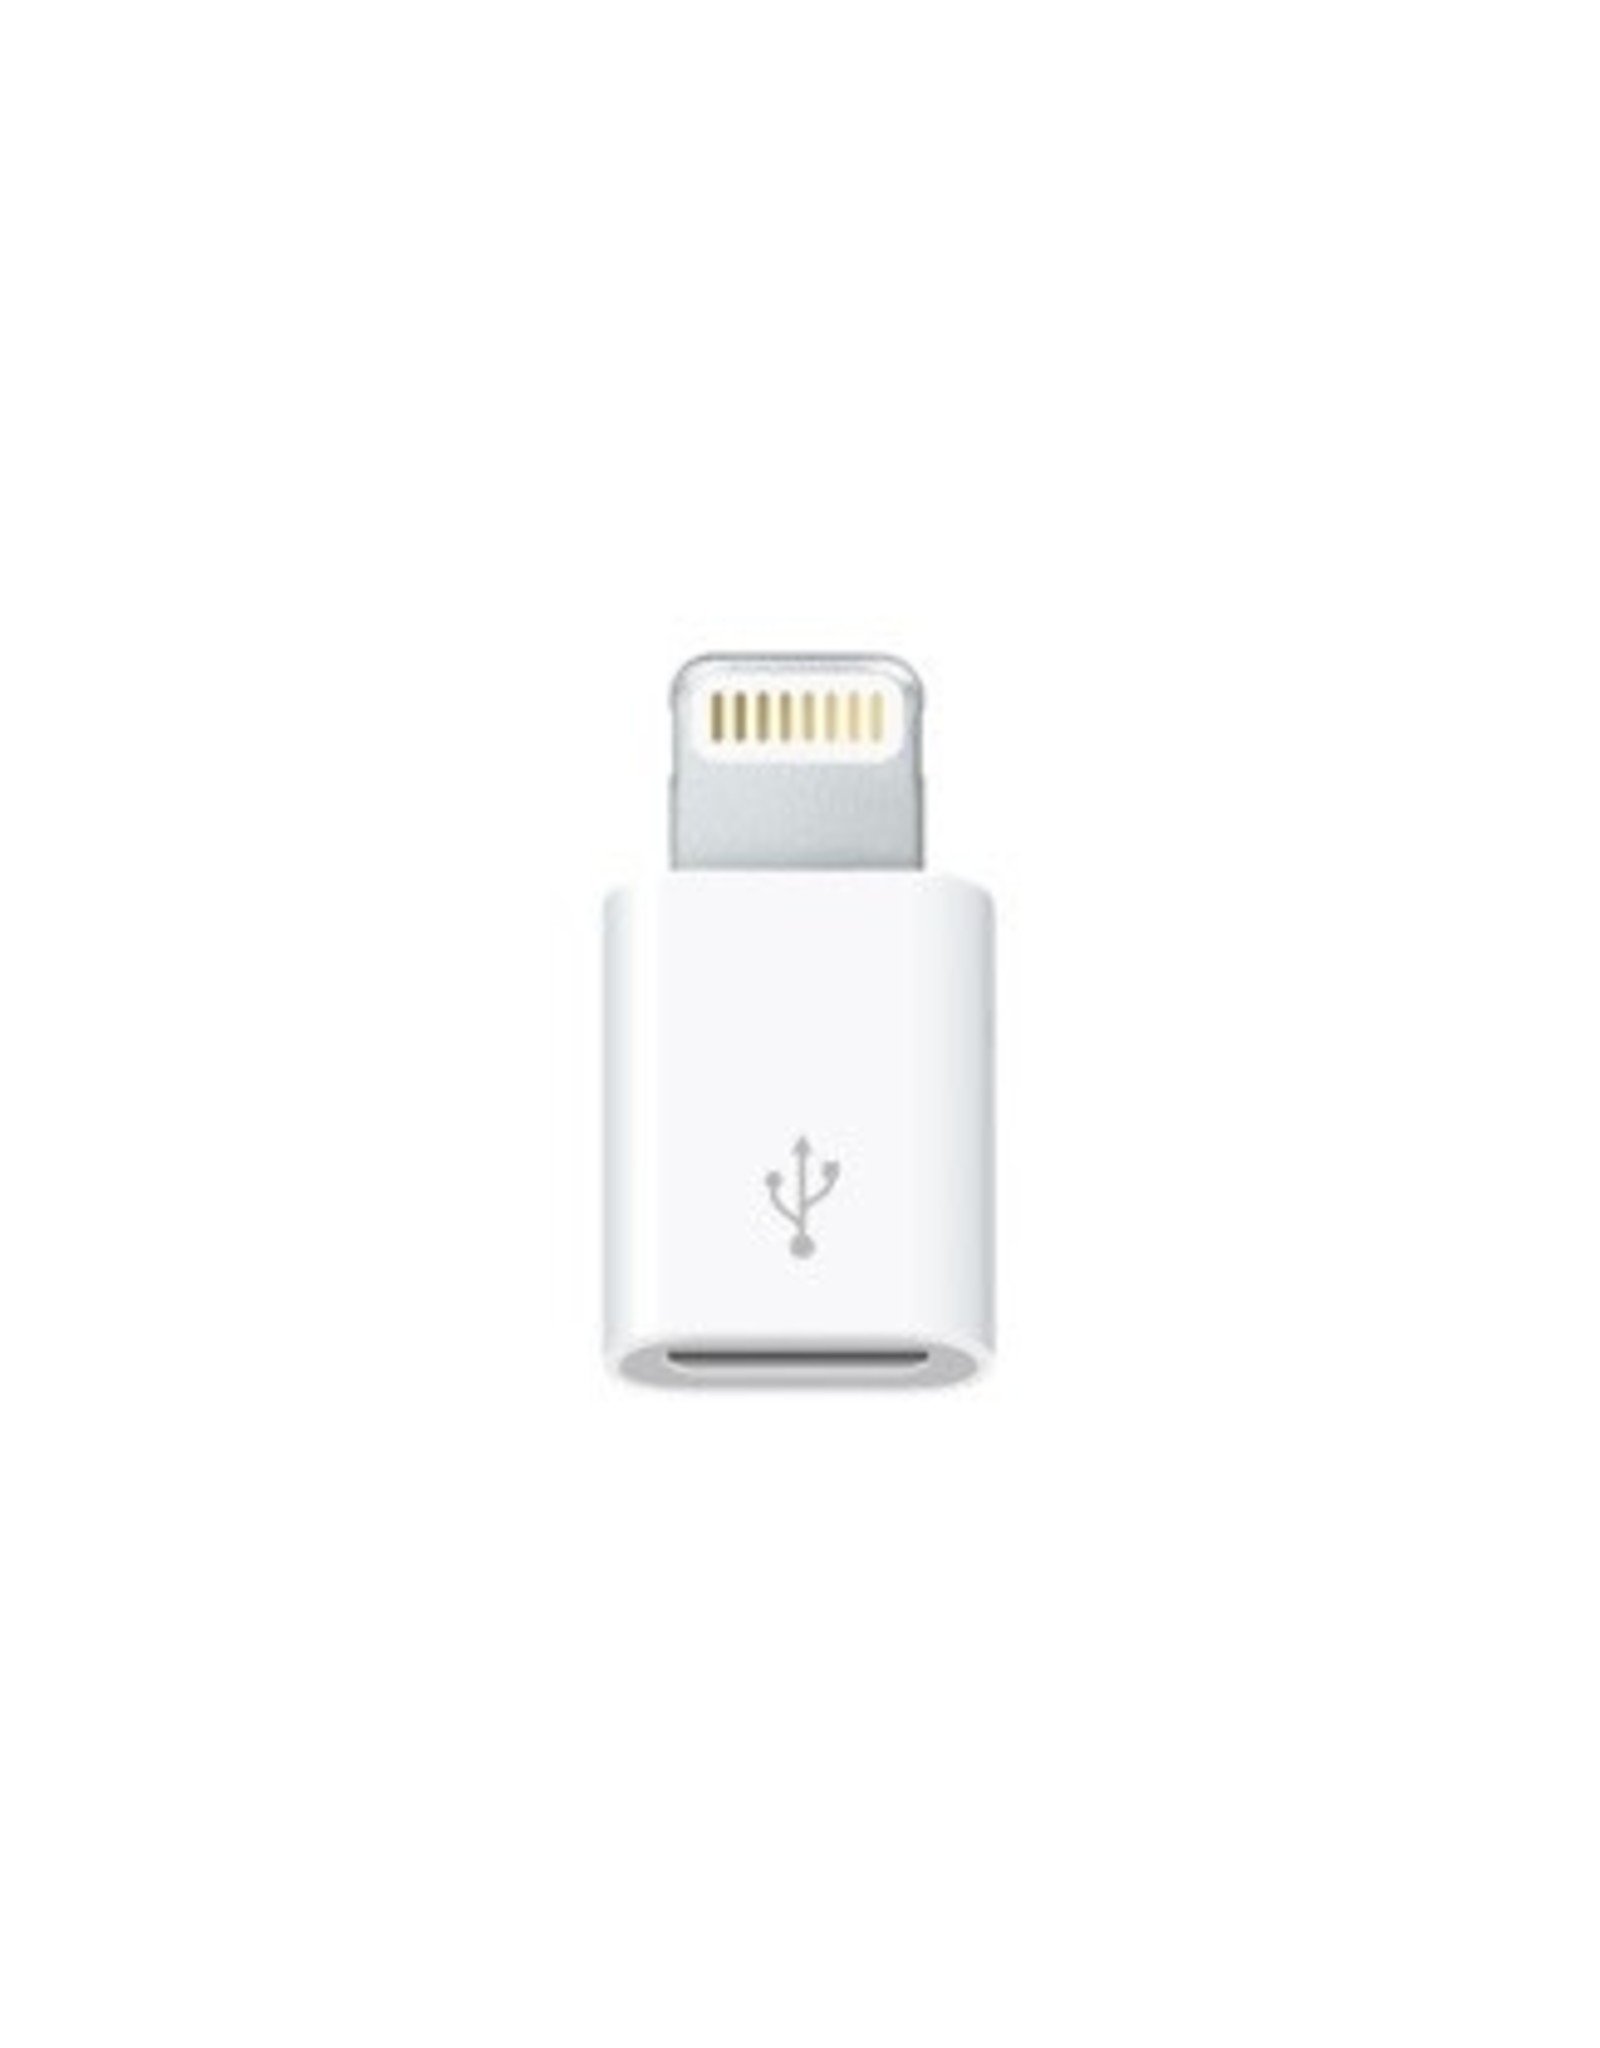 Apple Inst. Lightning to Micro USB Adapter